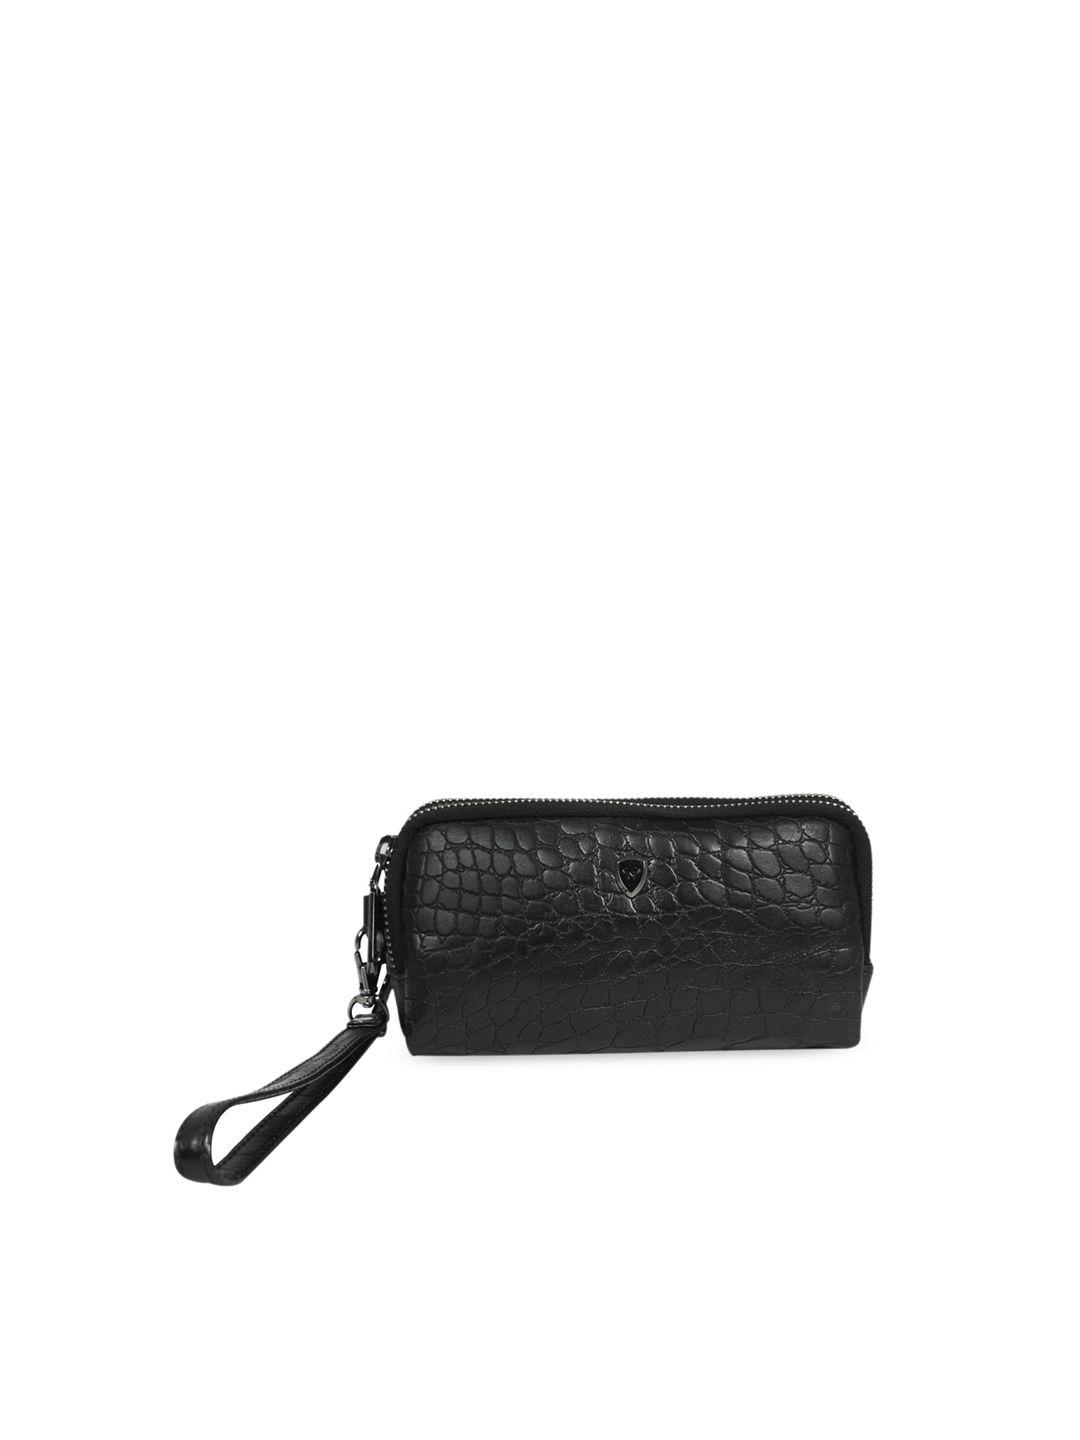 calfnero black textured genuine leather travel pouch